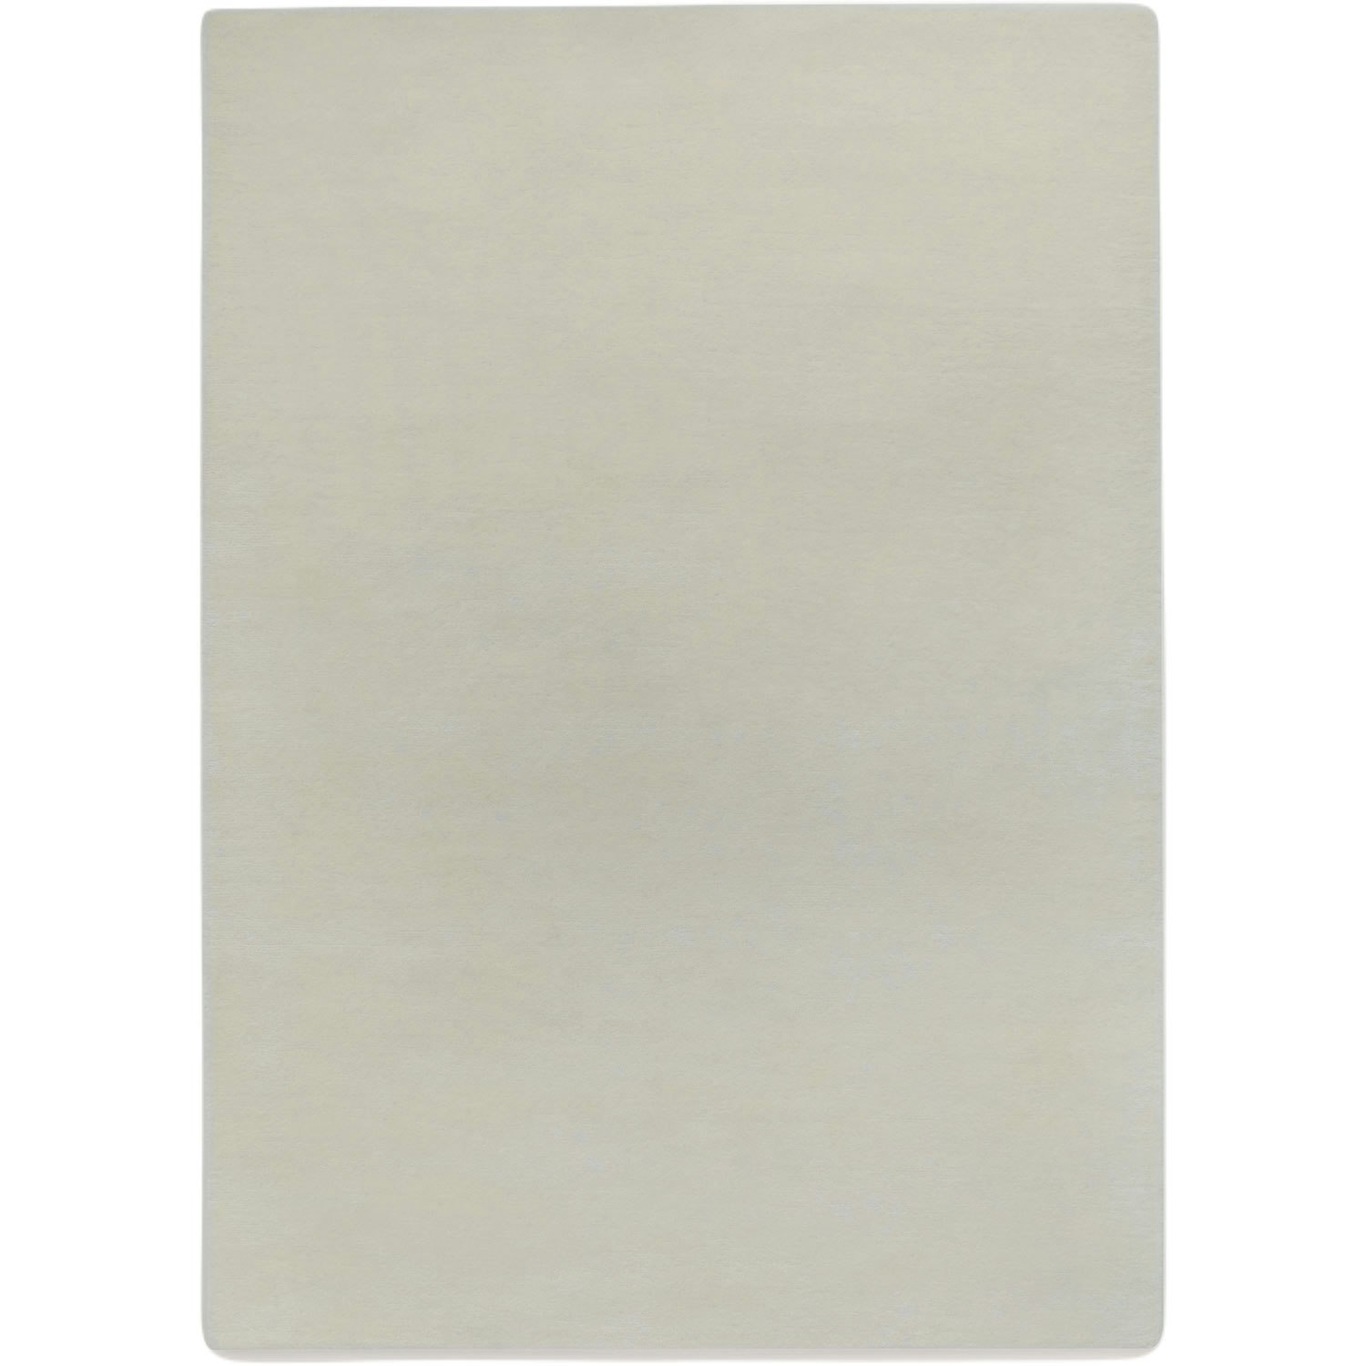 Liljehok Wool Rug Off-white, 300x200 cm